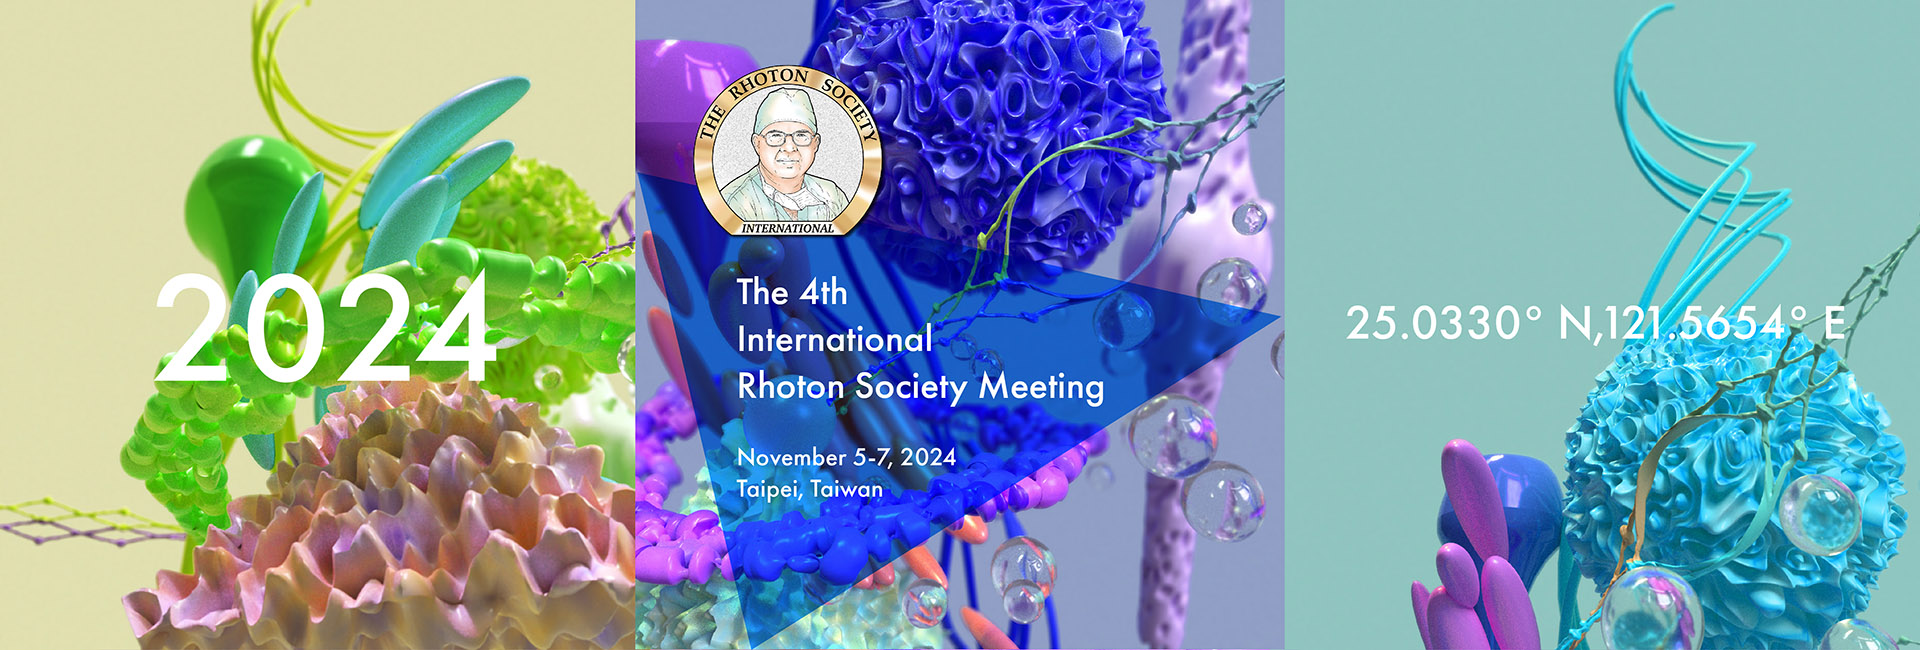 the 4th International Rhoton Society Meeting